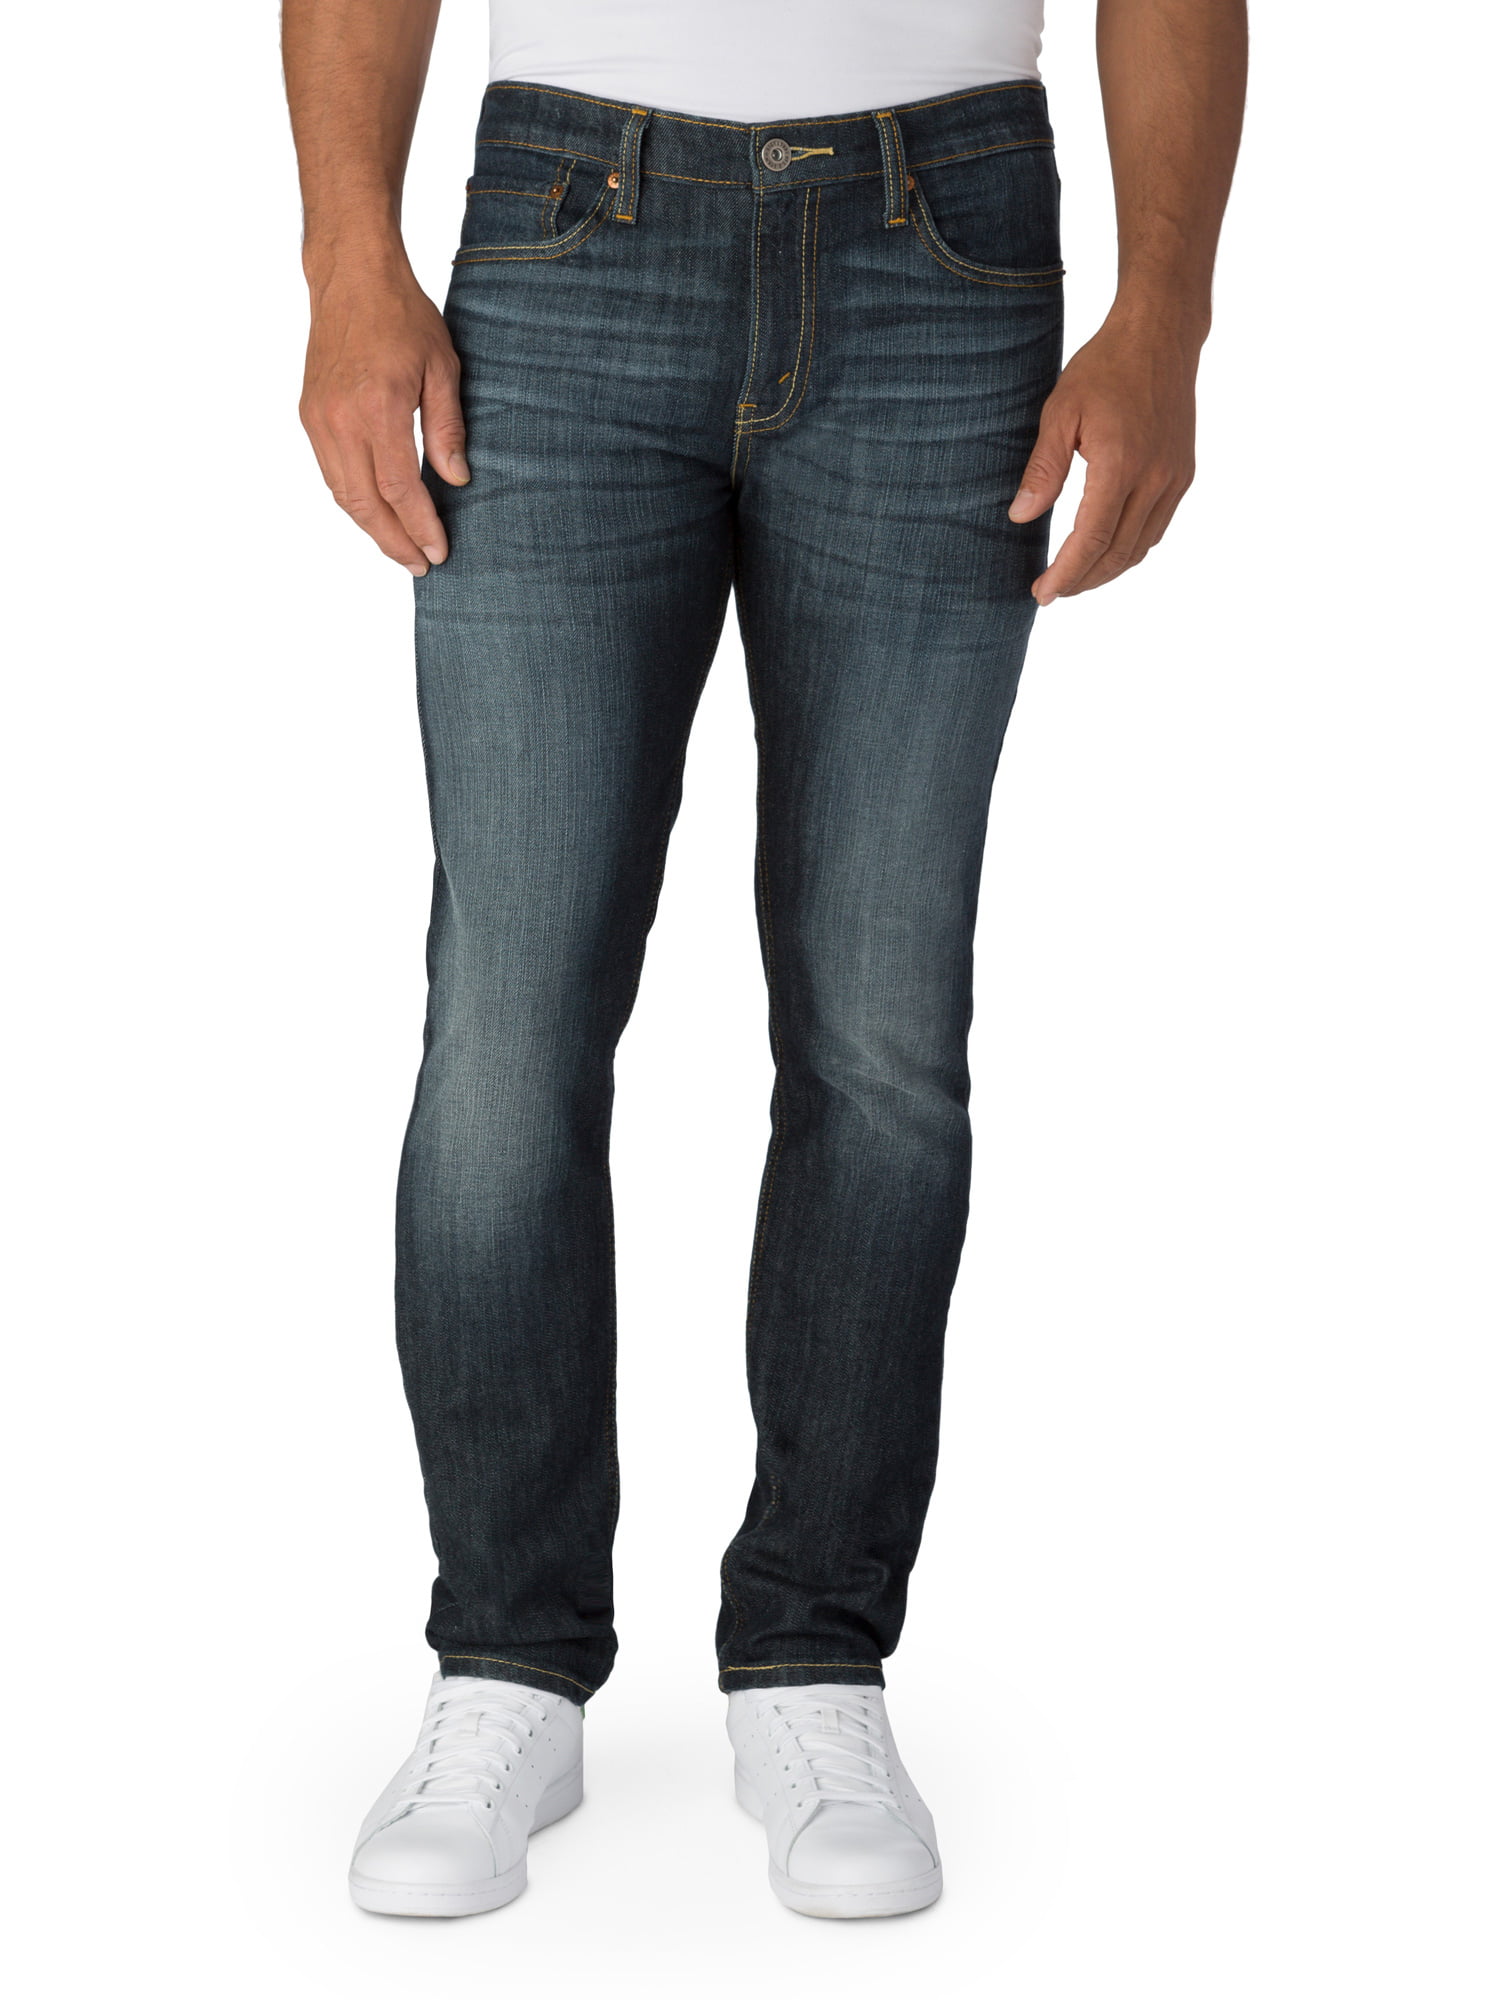 Skinny Fit Jeans - Walmart 